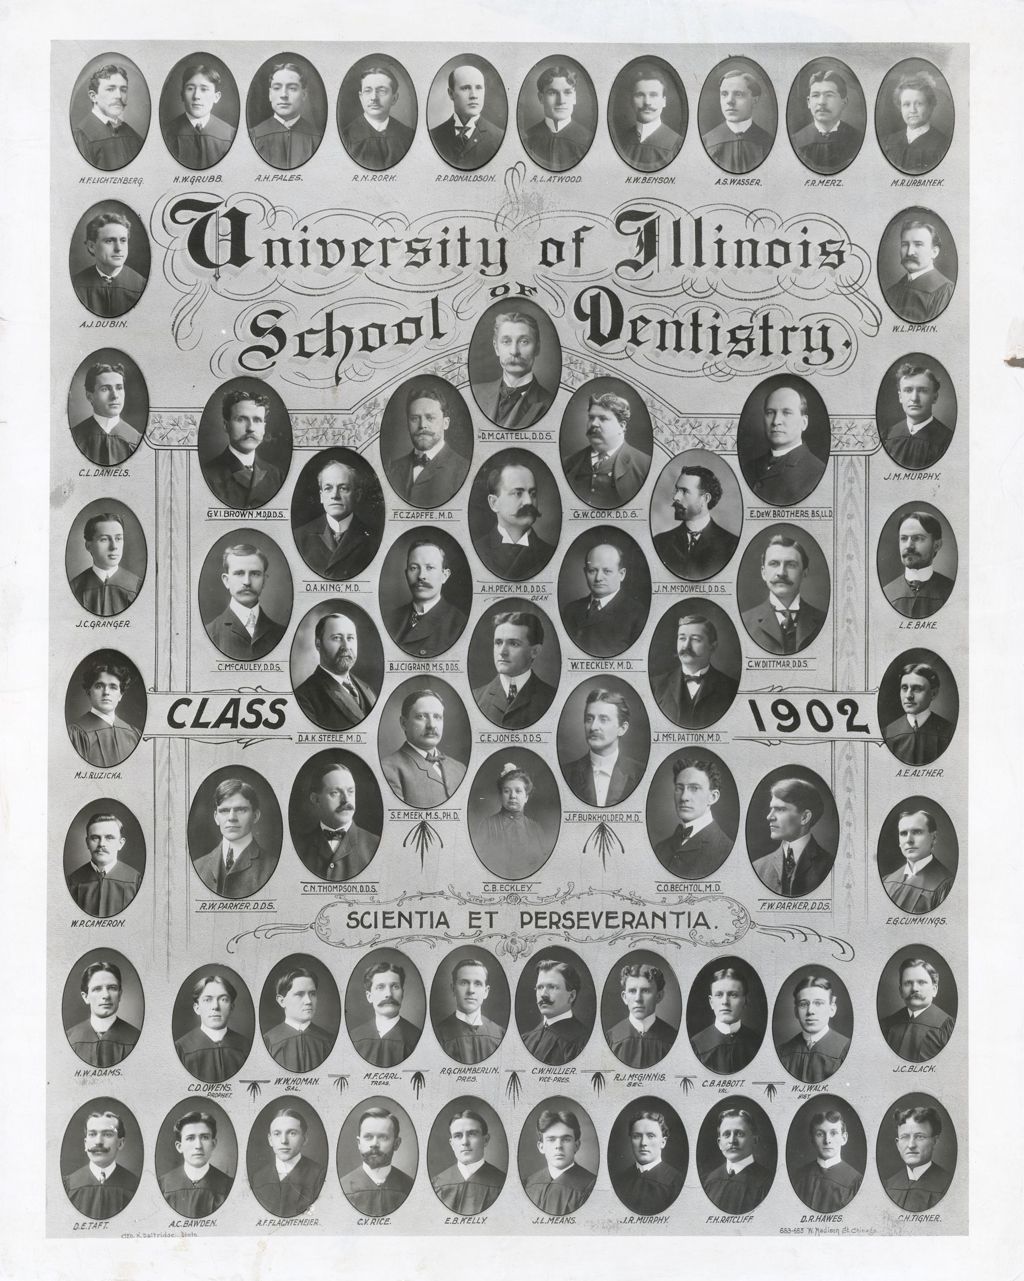 Miniature of 1902 graduating class, University of Illinois College of Dentistry